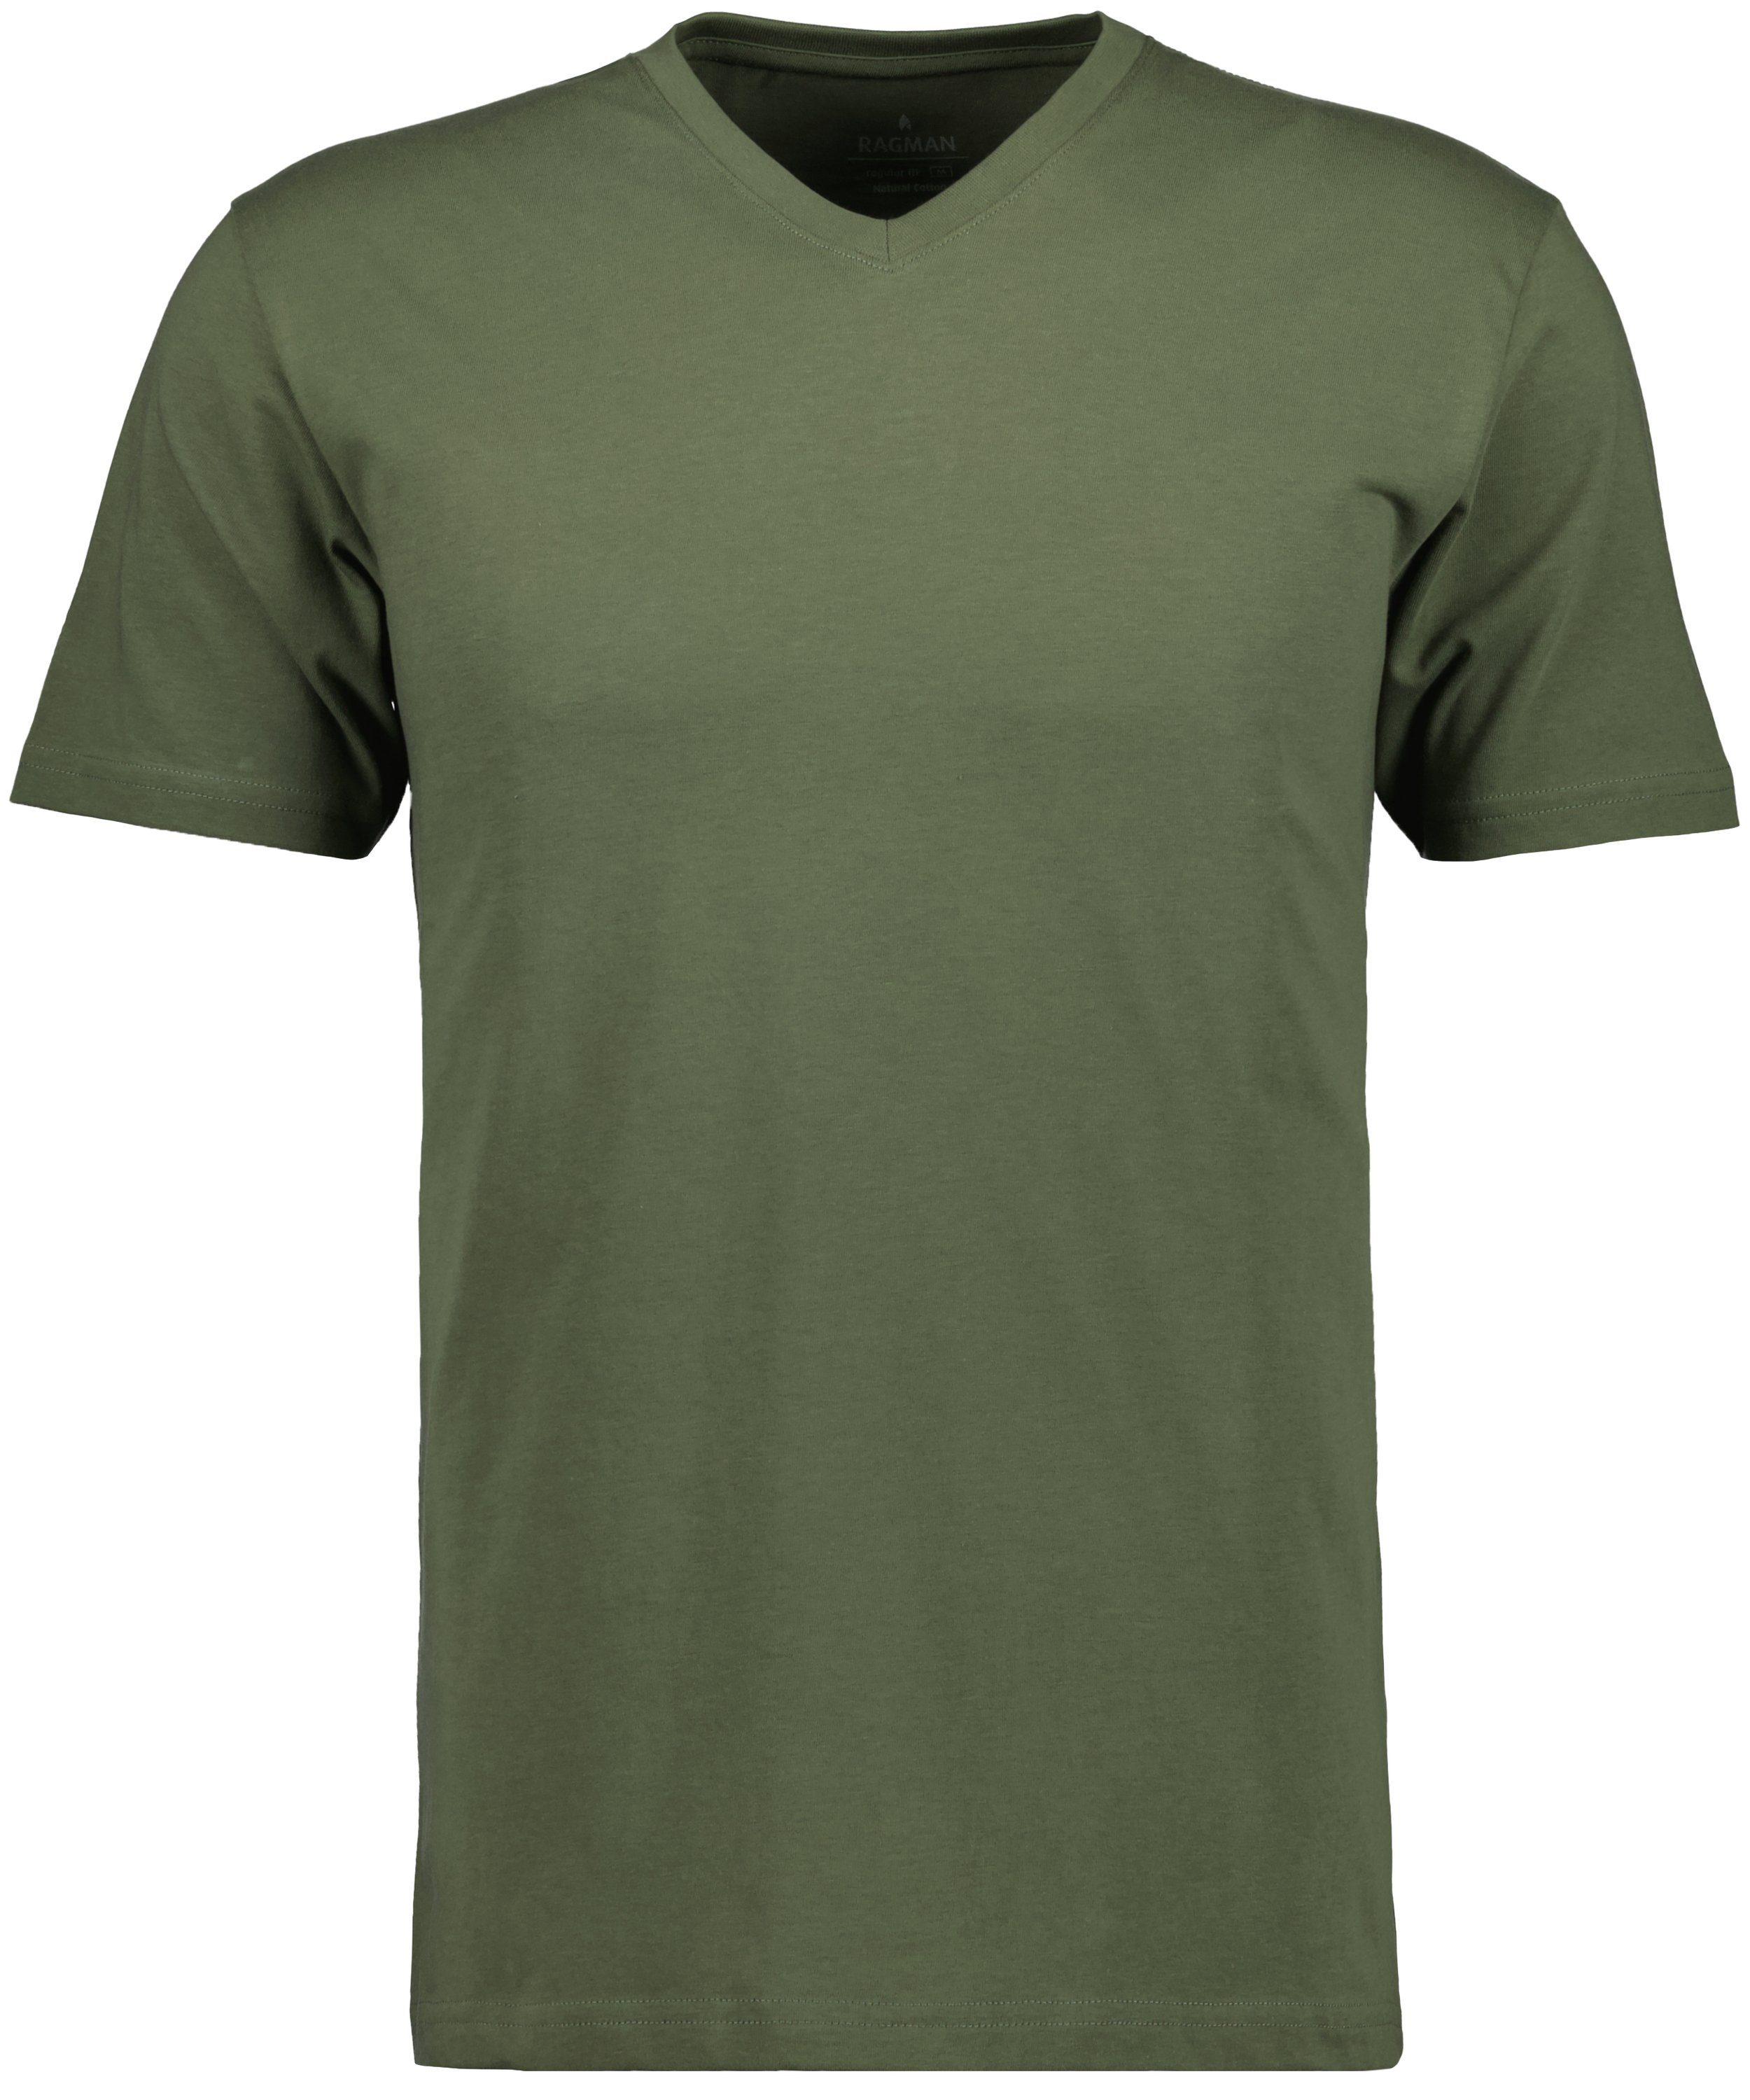 RAGMAN Oliv T-Shirt